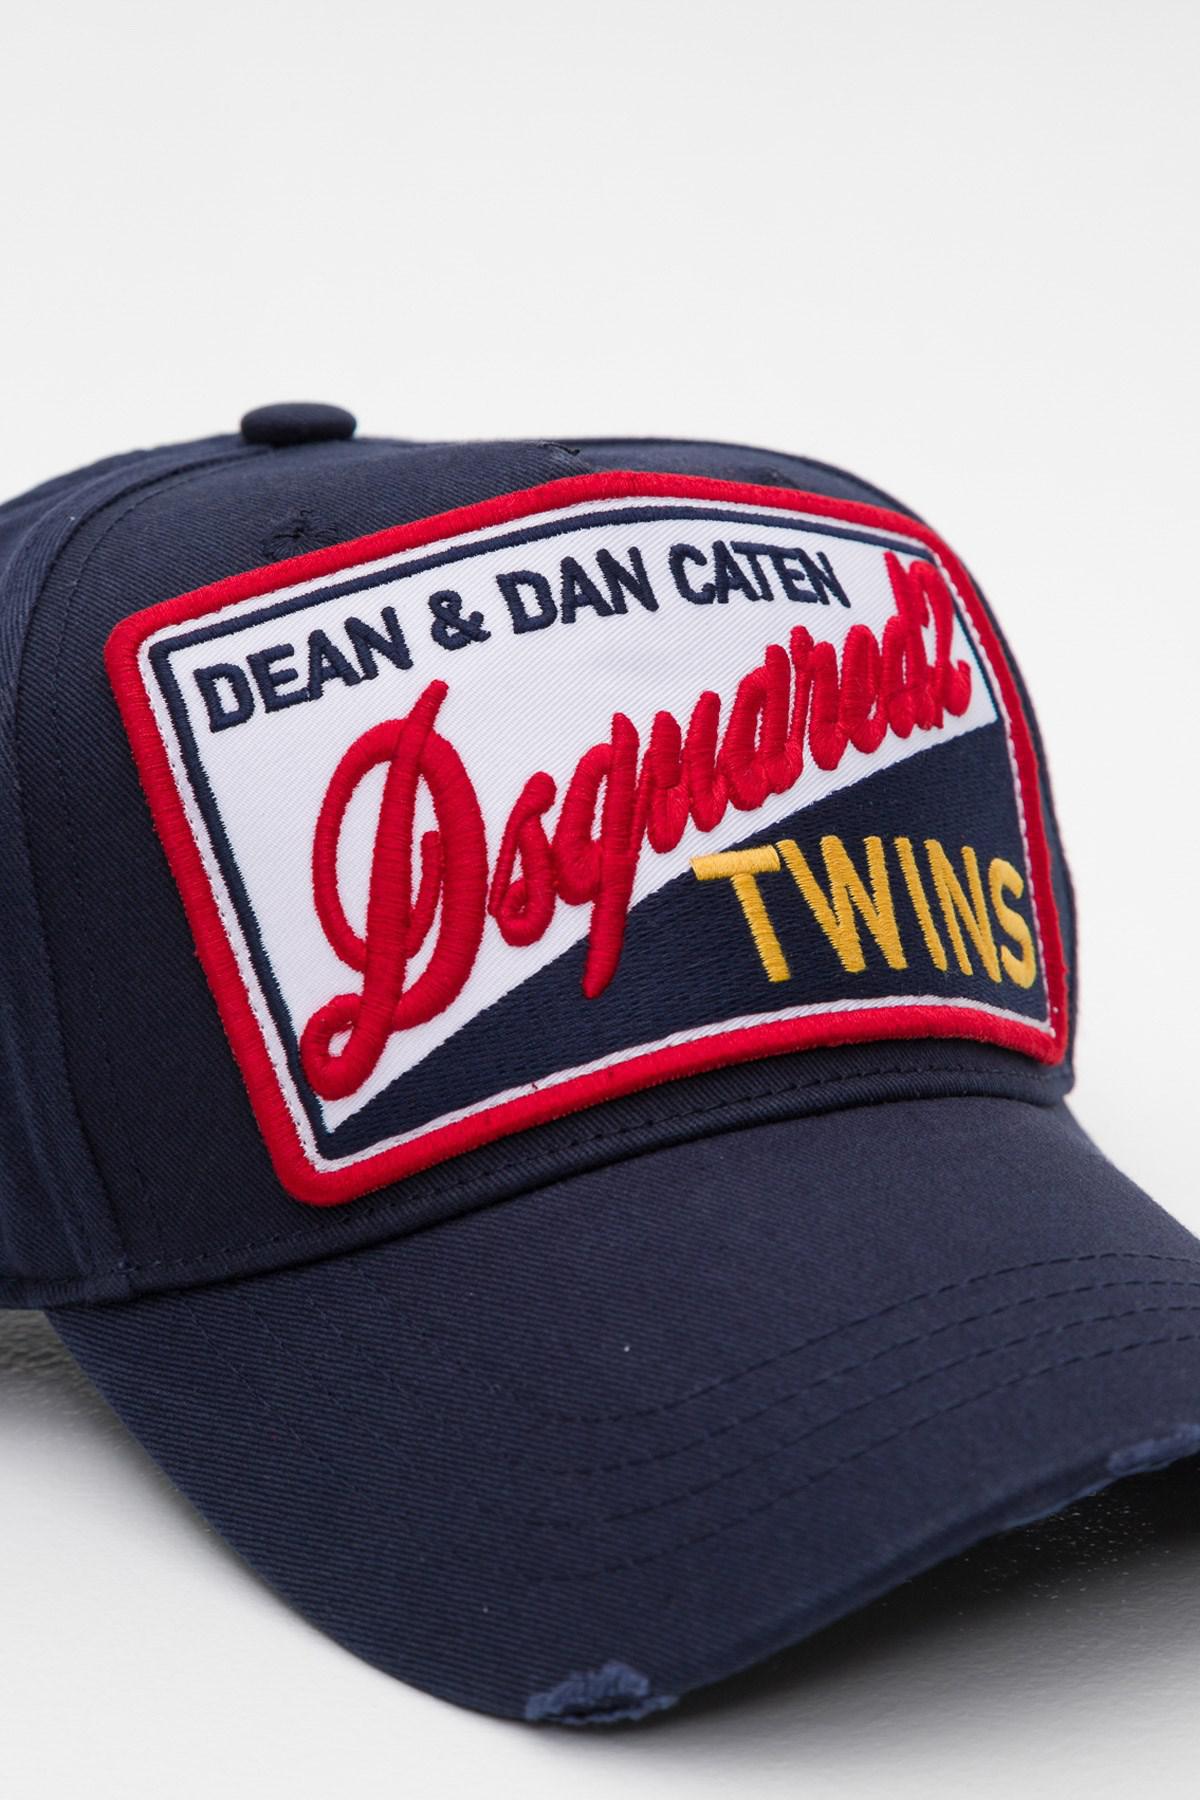 DSquared² Baseball Cap Con Patch Ricamo Dean & Dan Caten Dsquared 2 Twins  in Blue for Men - Lyst